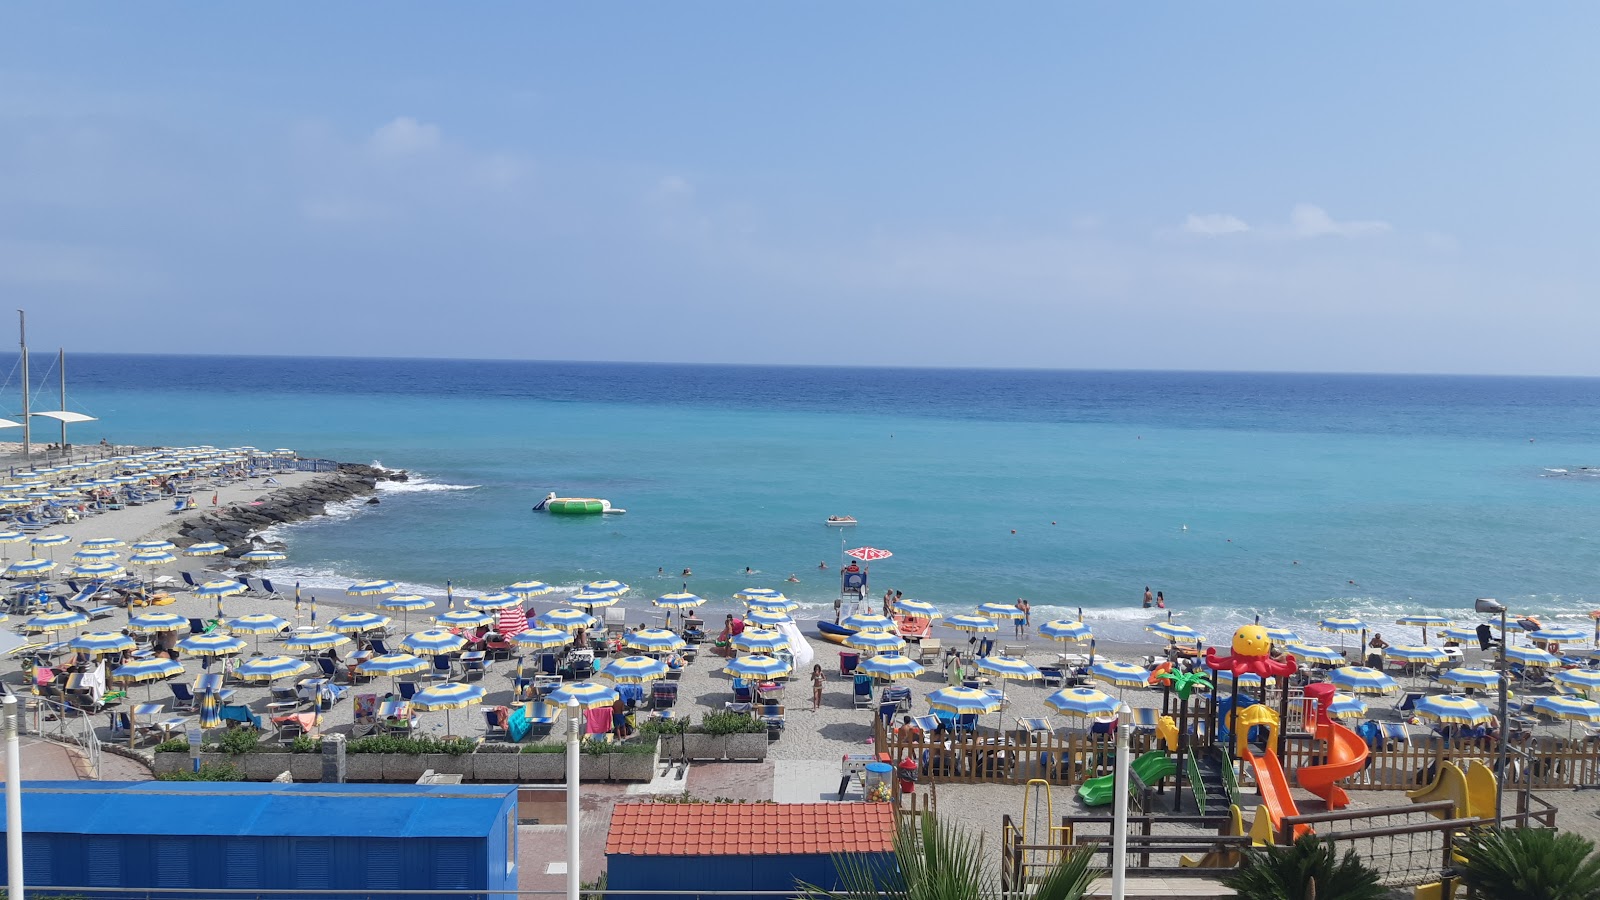 Foto de Spiaggia di Borghetto com alto nível de limpeza